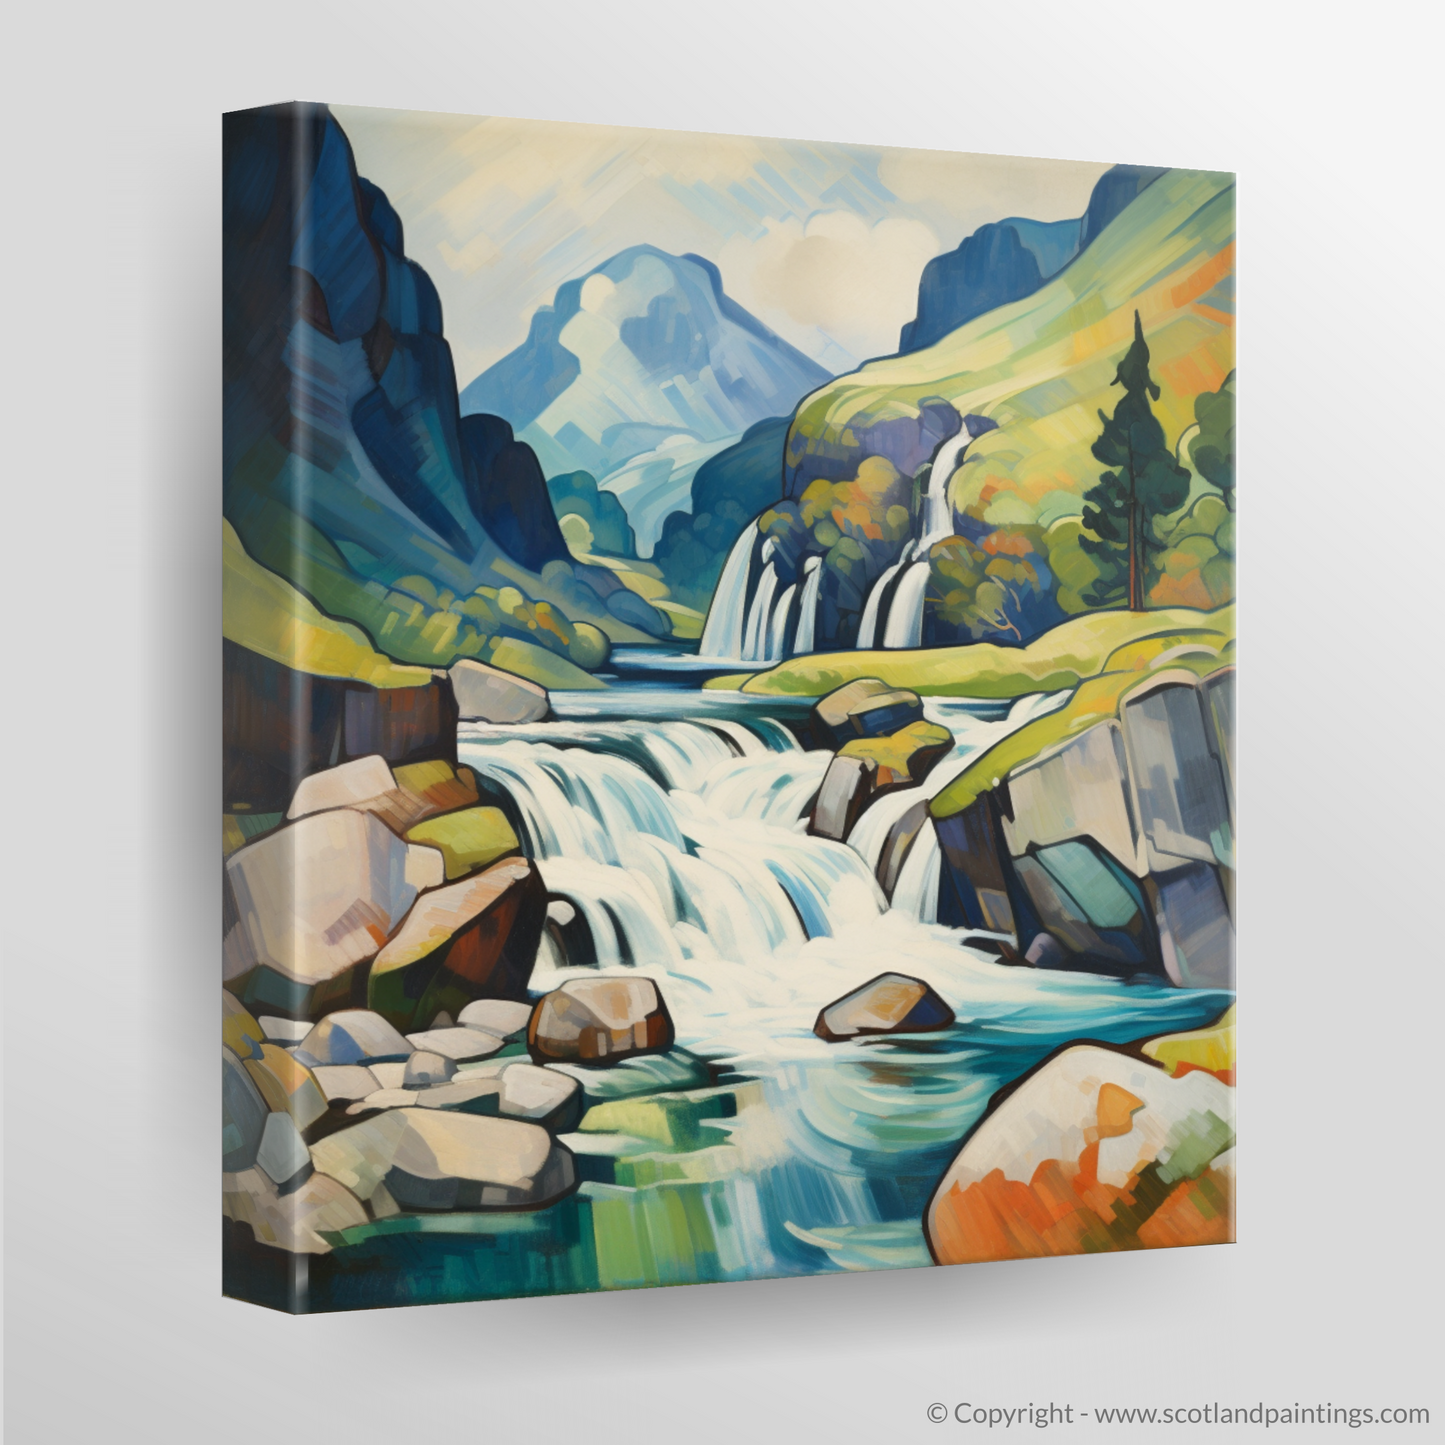 Cubist Cascade: A Geometric Interpretation of Glencoe's Waterfall